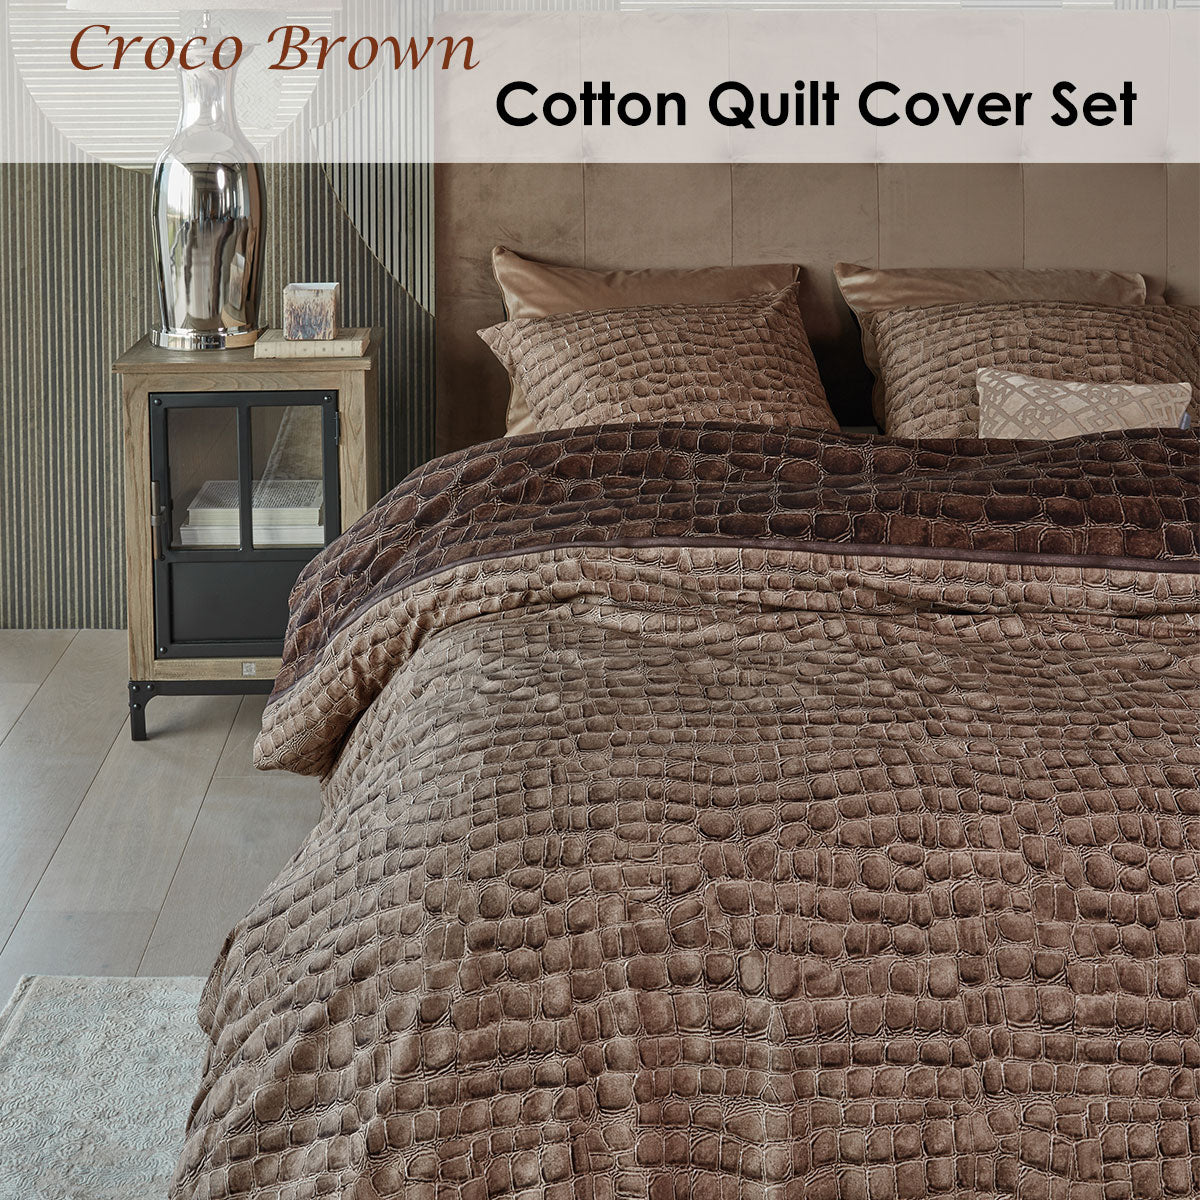 Riviera Maison Croco Brown Cotton Quilt Cover Set Queen